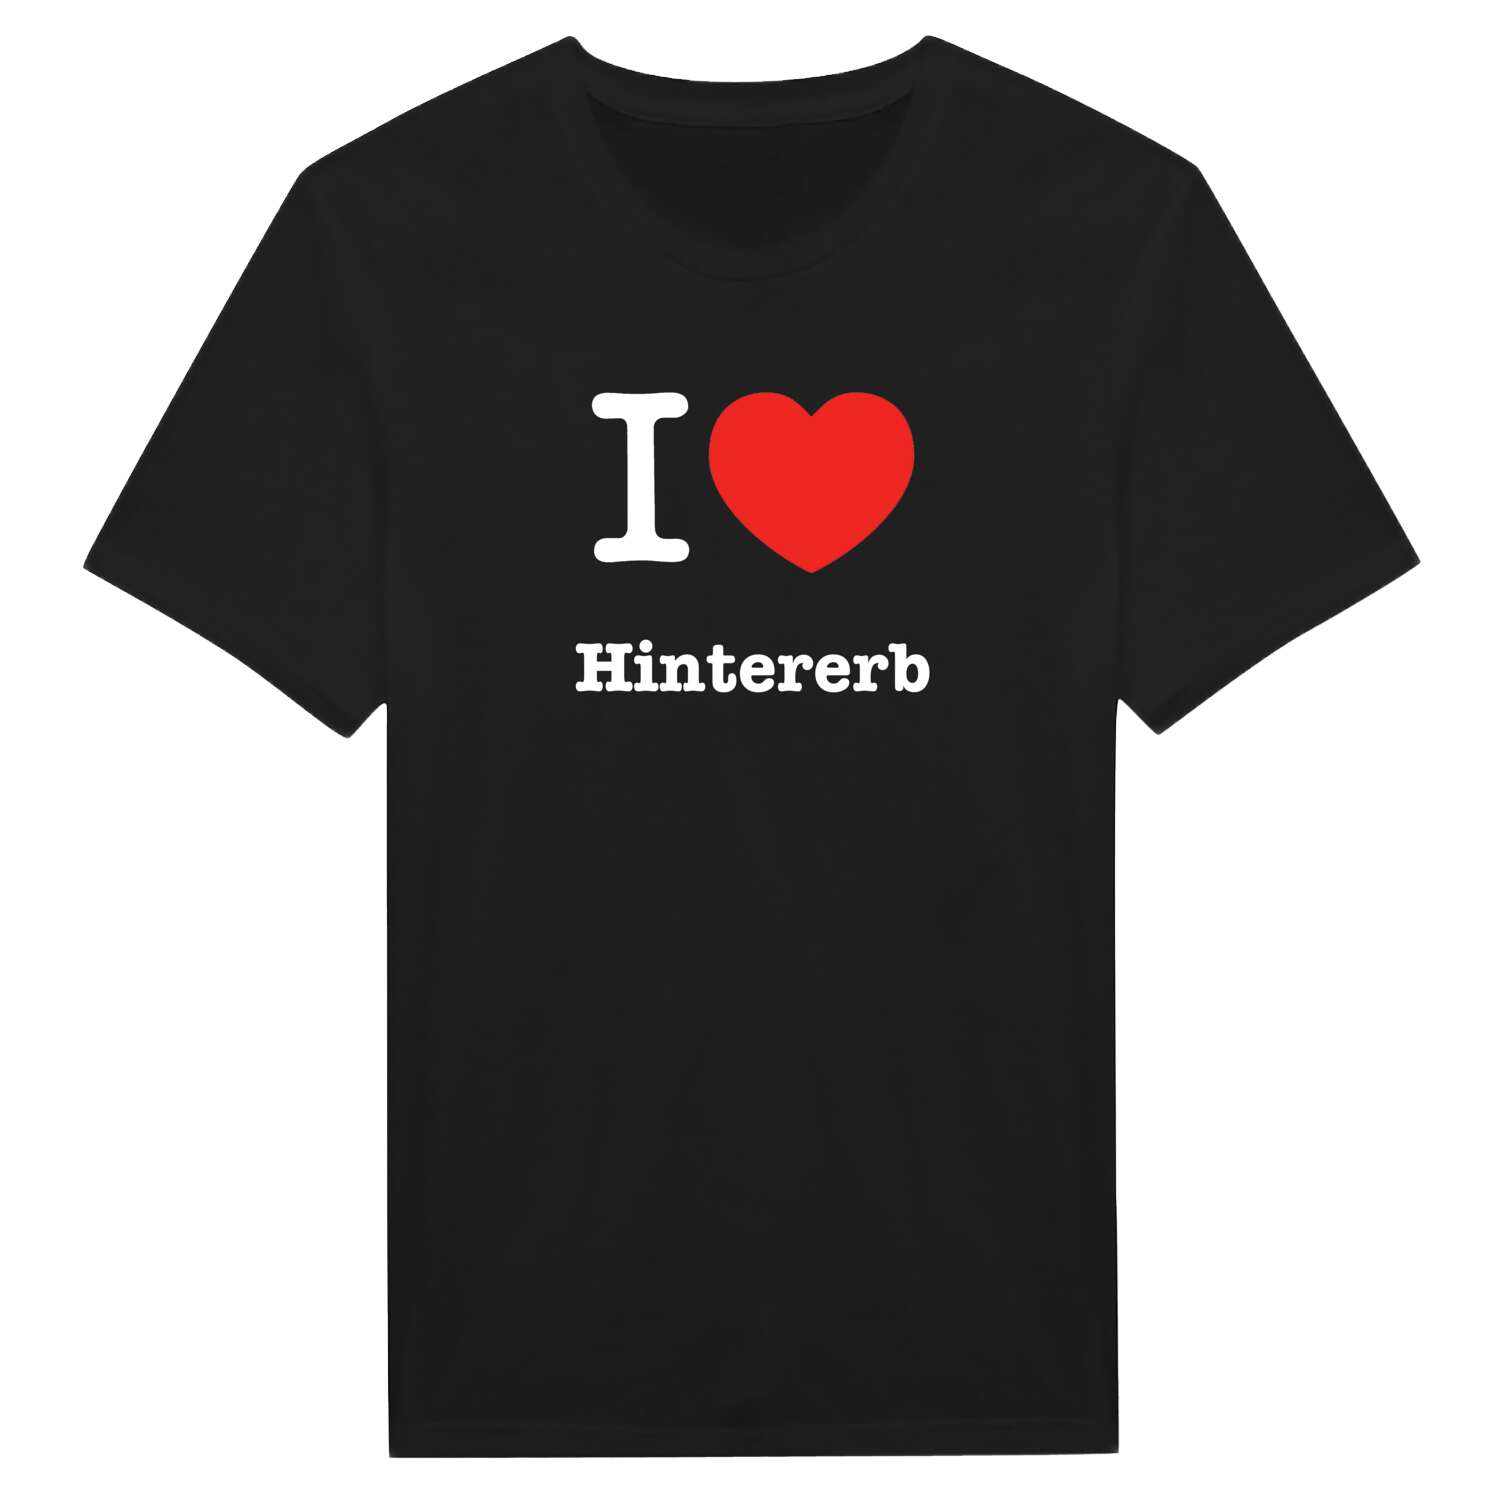 Hintererb T-Shirt »I love«